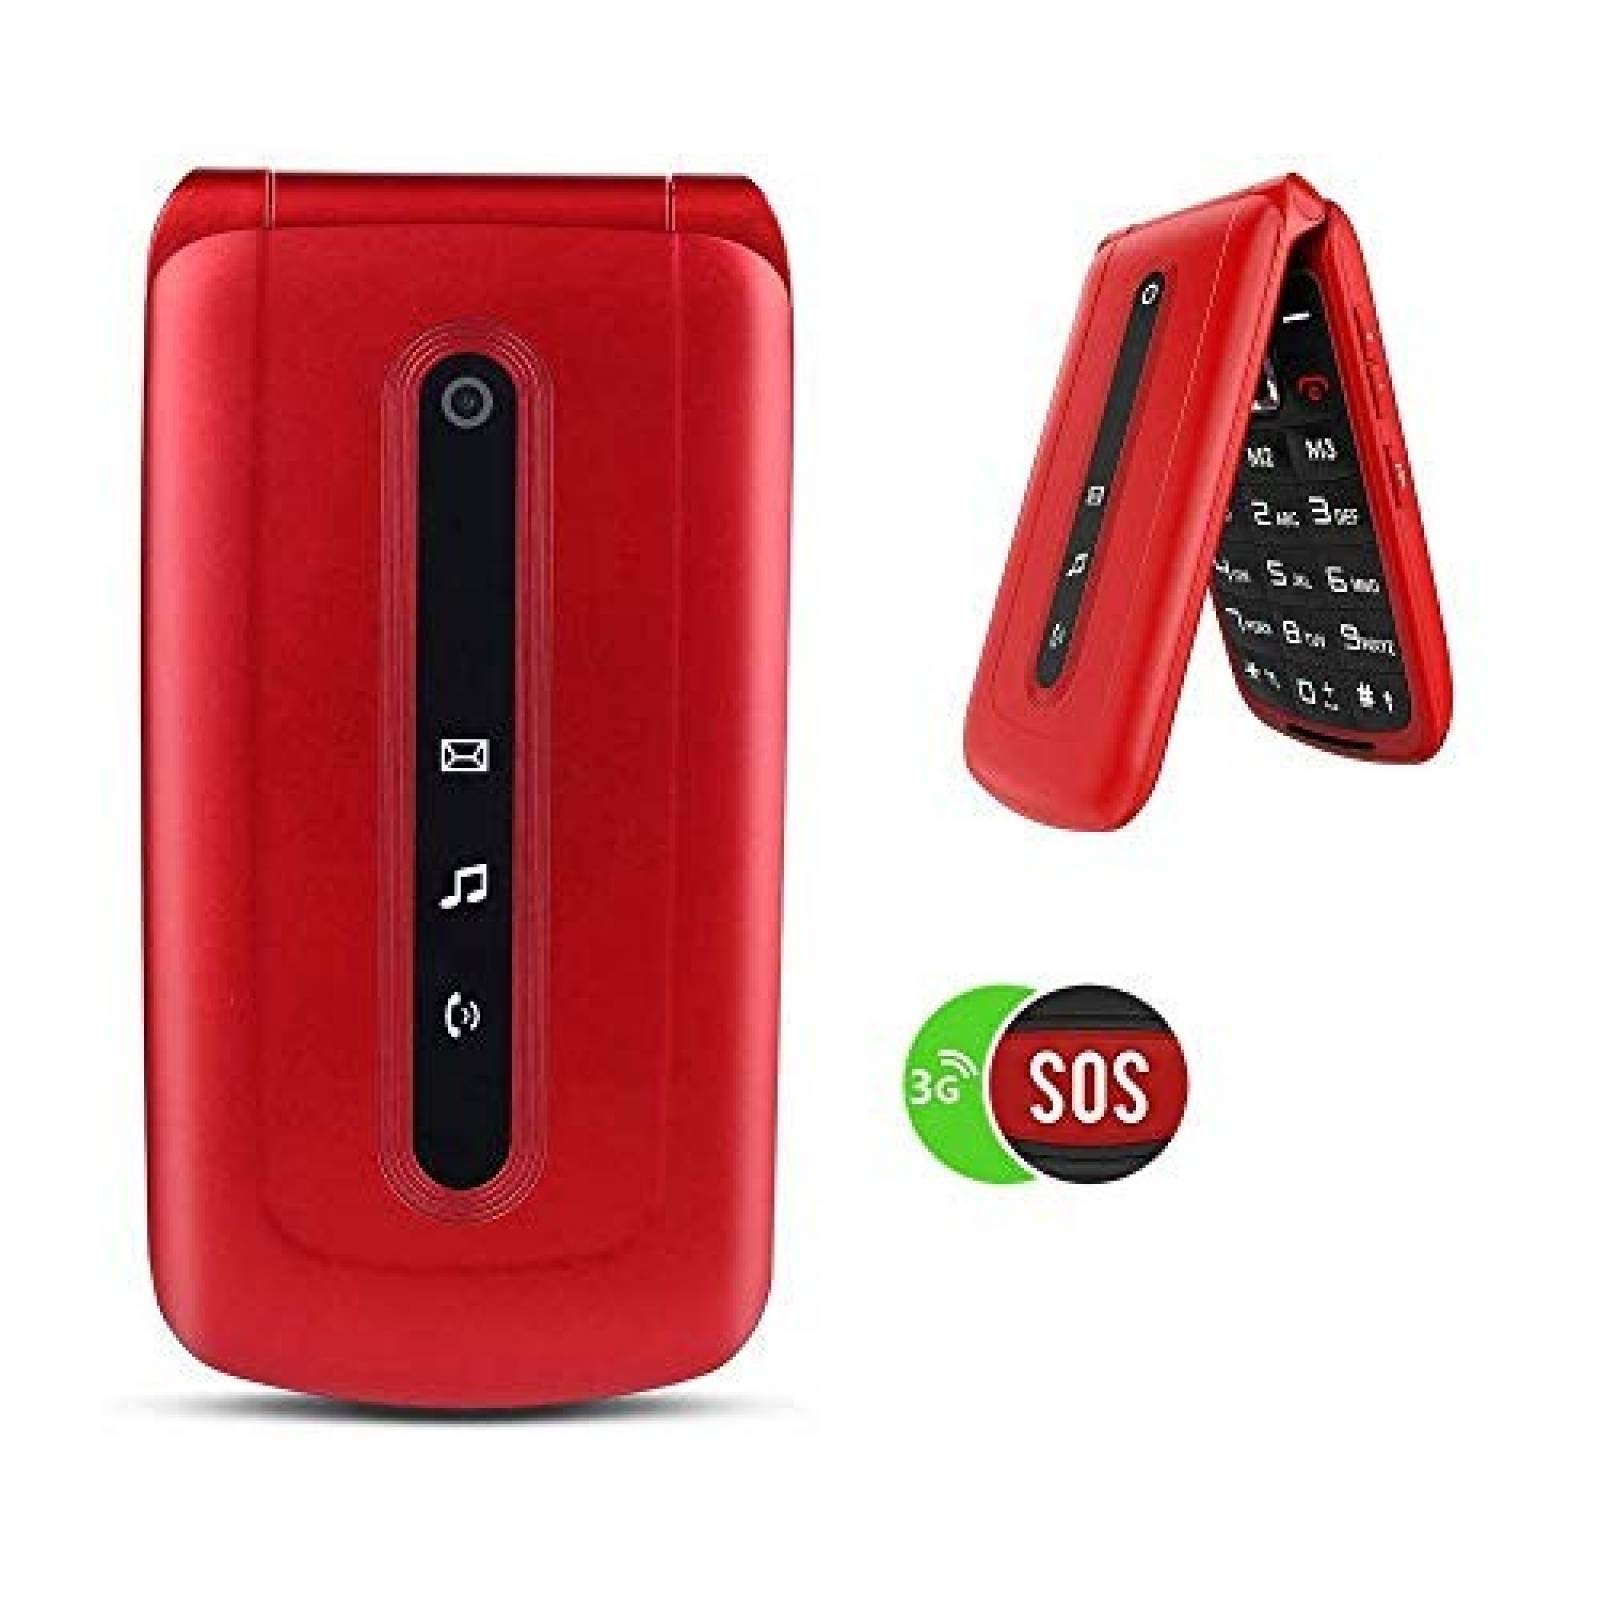 Teléfono celular desbloqueado USHINING tarjeta SIM dual Rojo